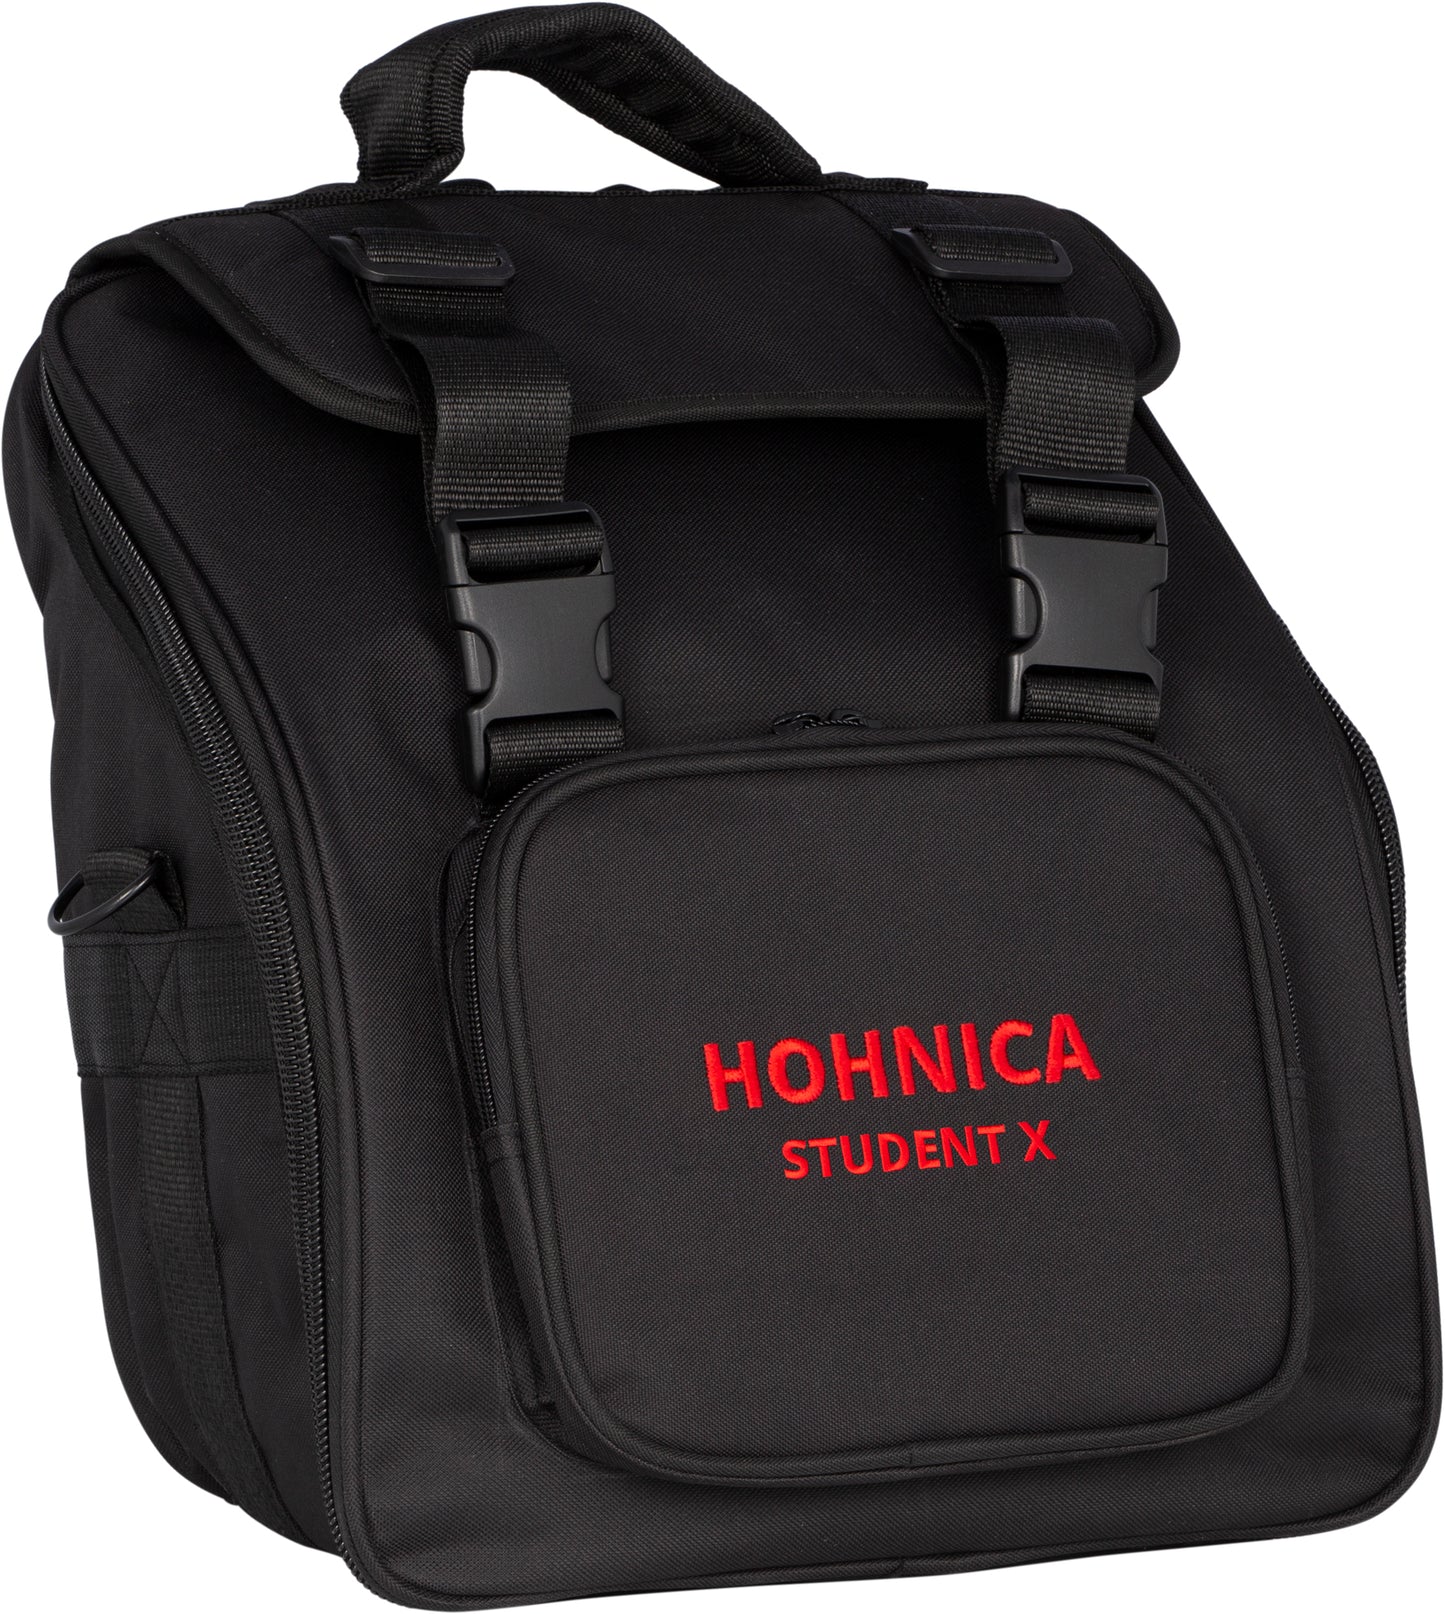 Hohner Hohnica StudentX Piano Accordion (22 Key, 8 Bass)